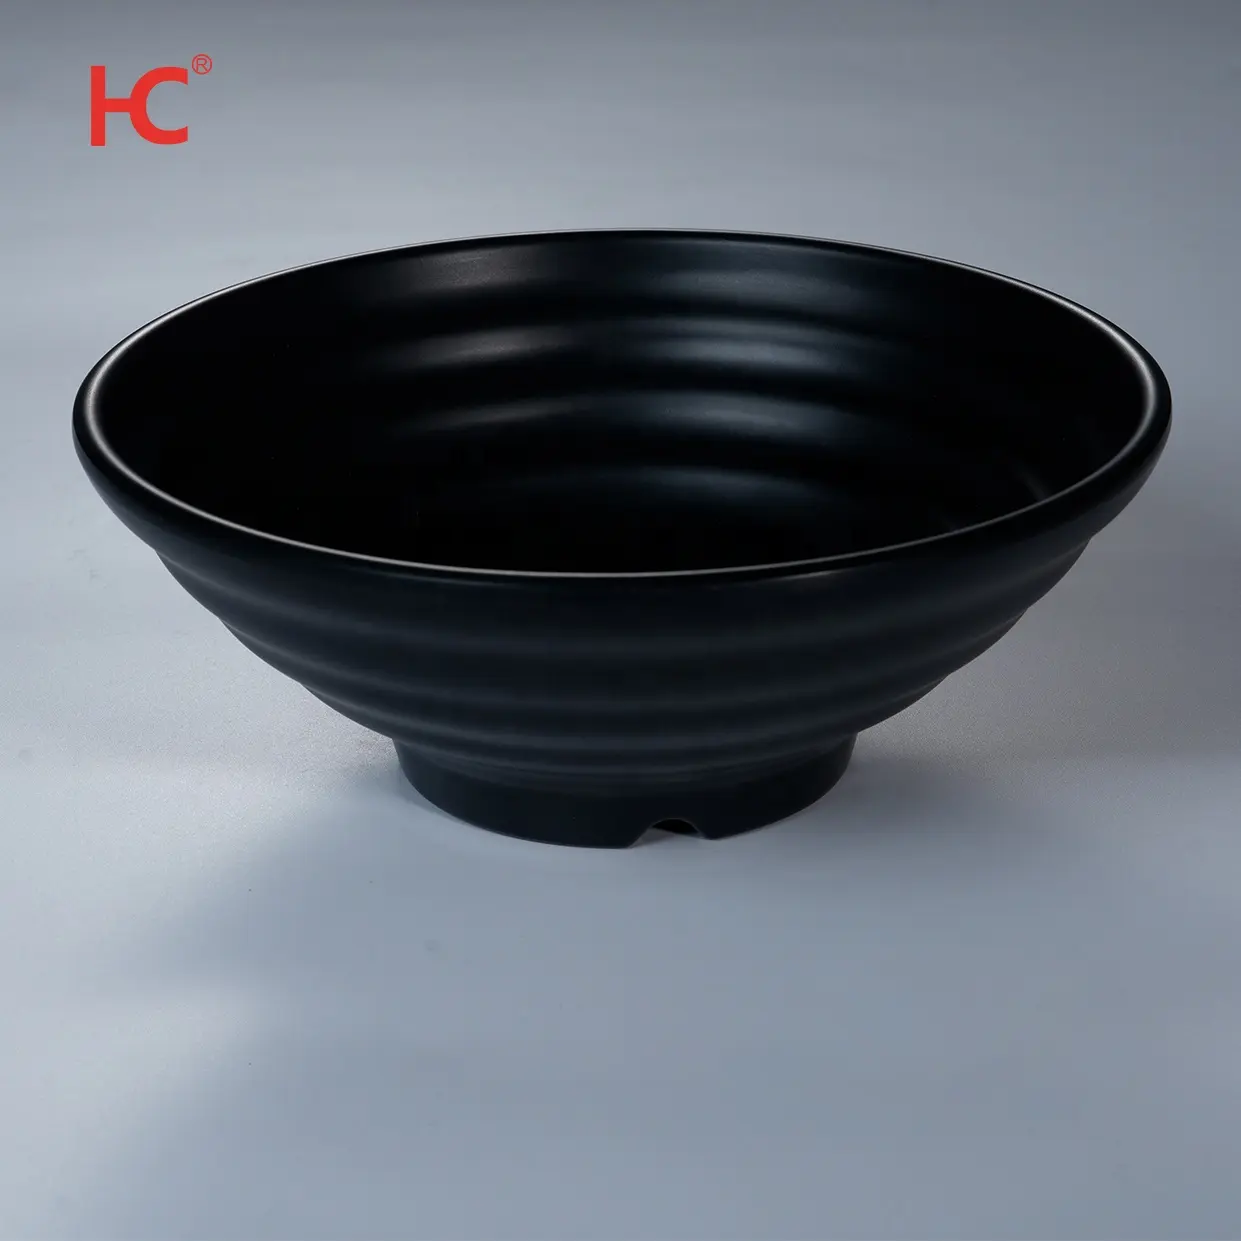 Fabrik hochwertiges 8,5-Zoll-Melamin-Geschirr japanisch 100 % Melamin schwarze Farbe runde Schüssel lagerbestand Großhandel